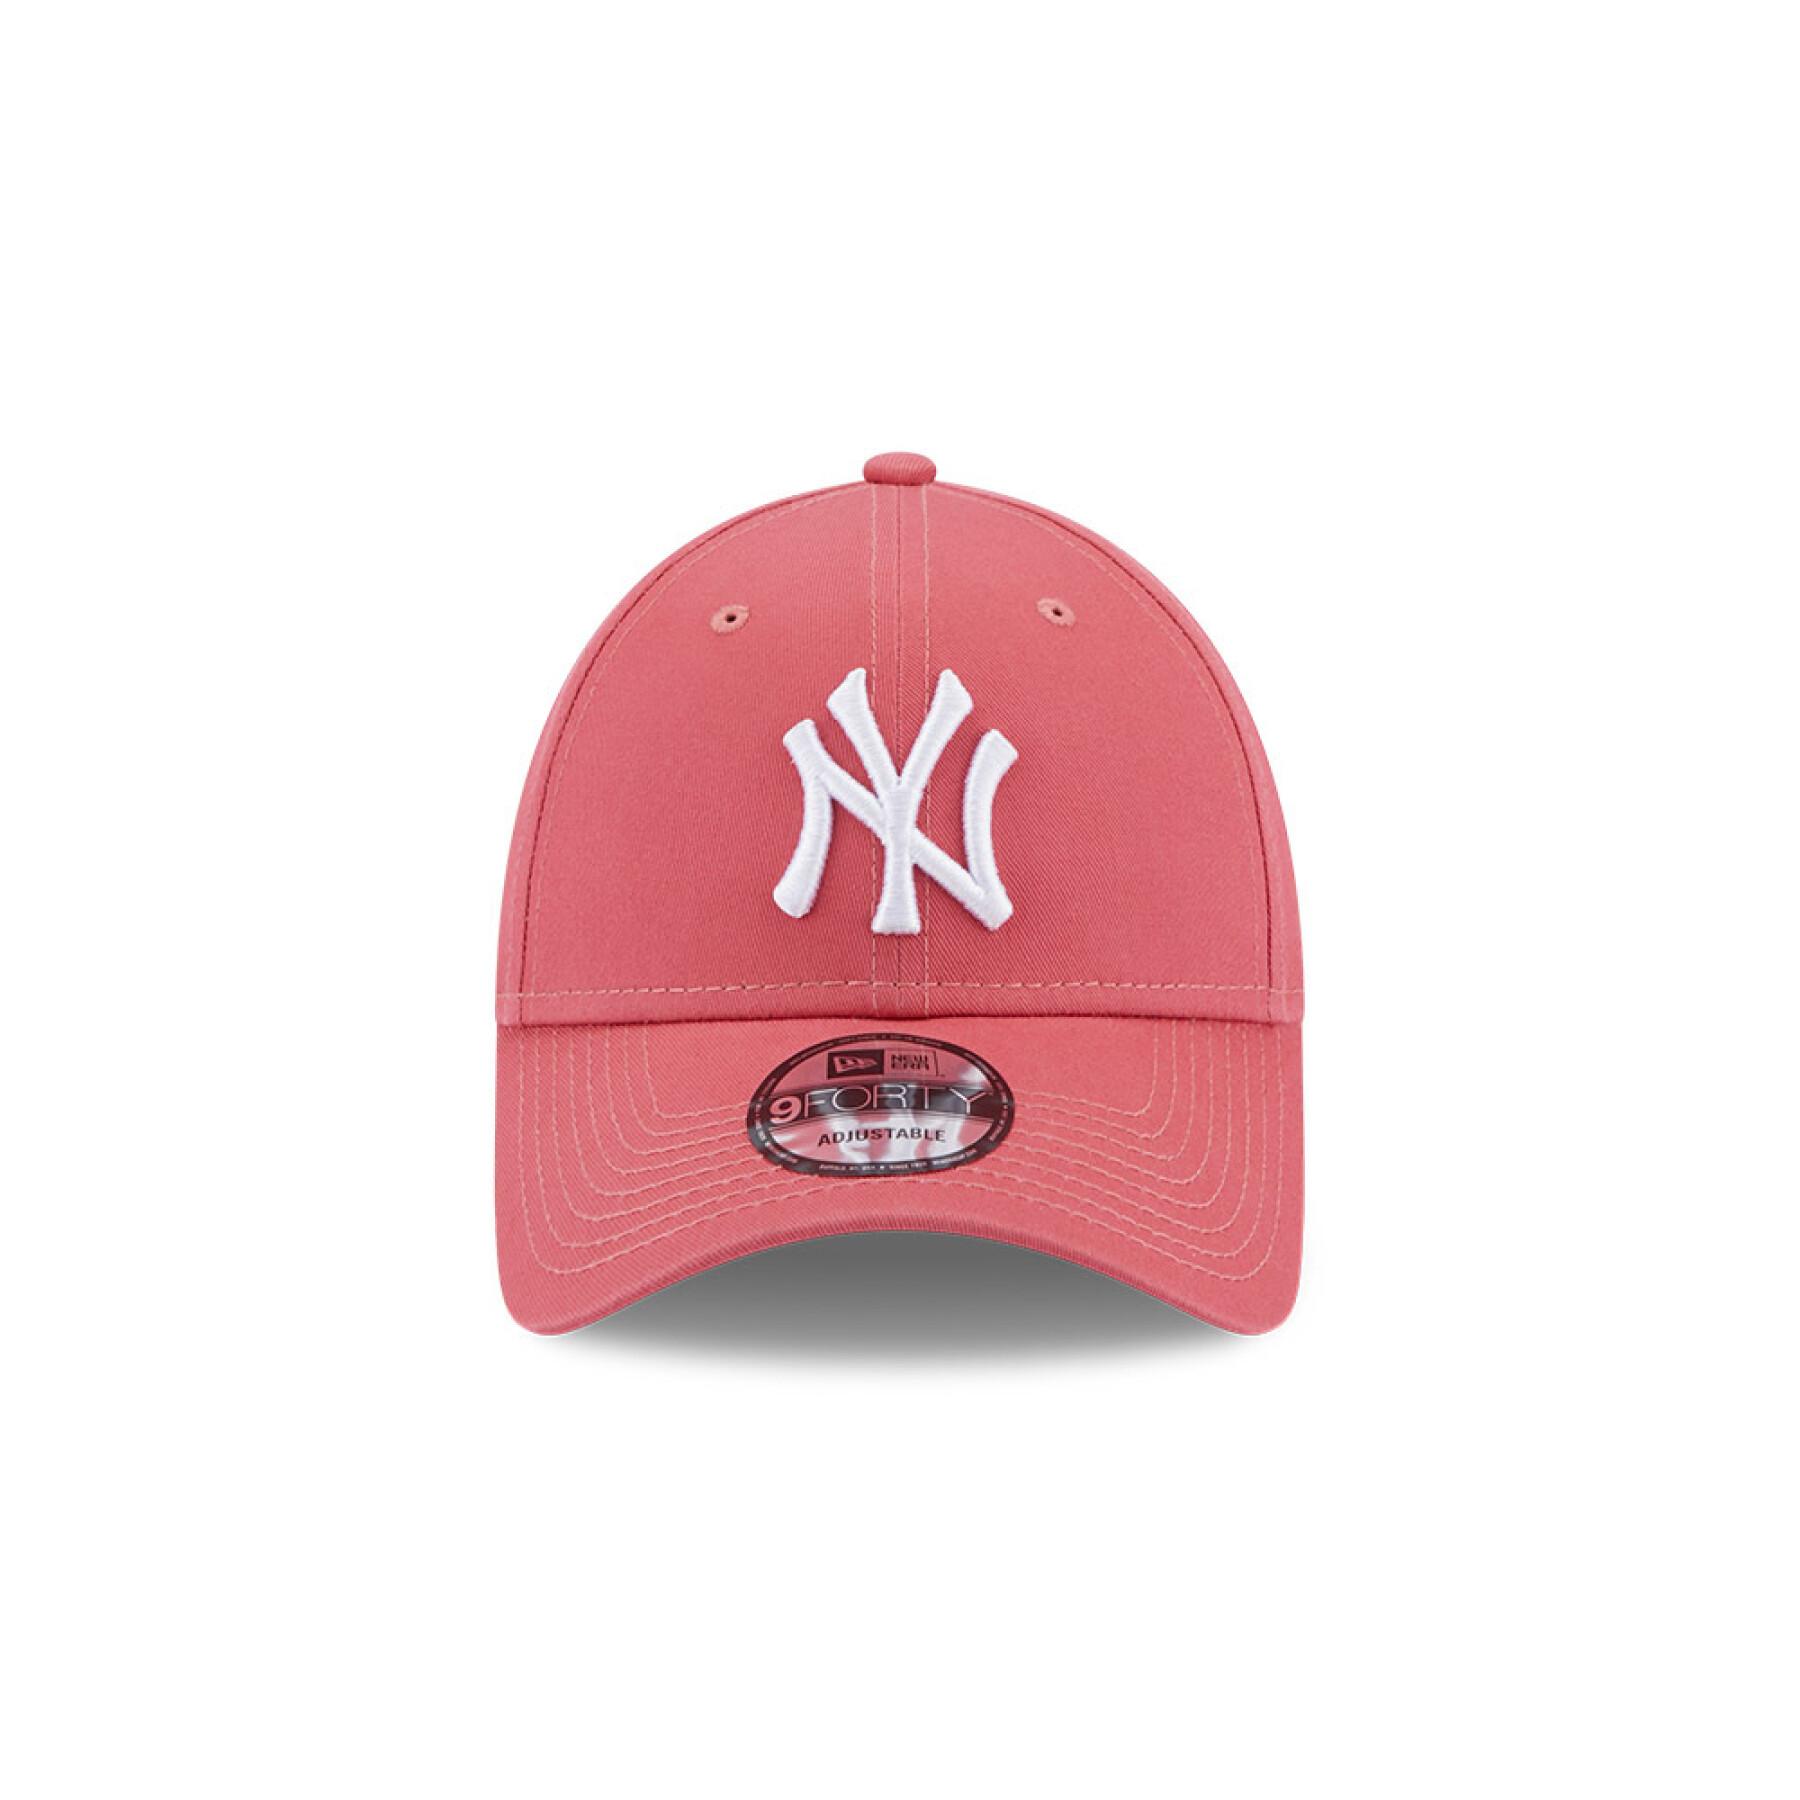 Gorra 9forty New York Yankees League Essential